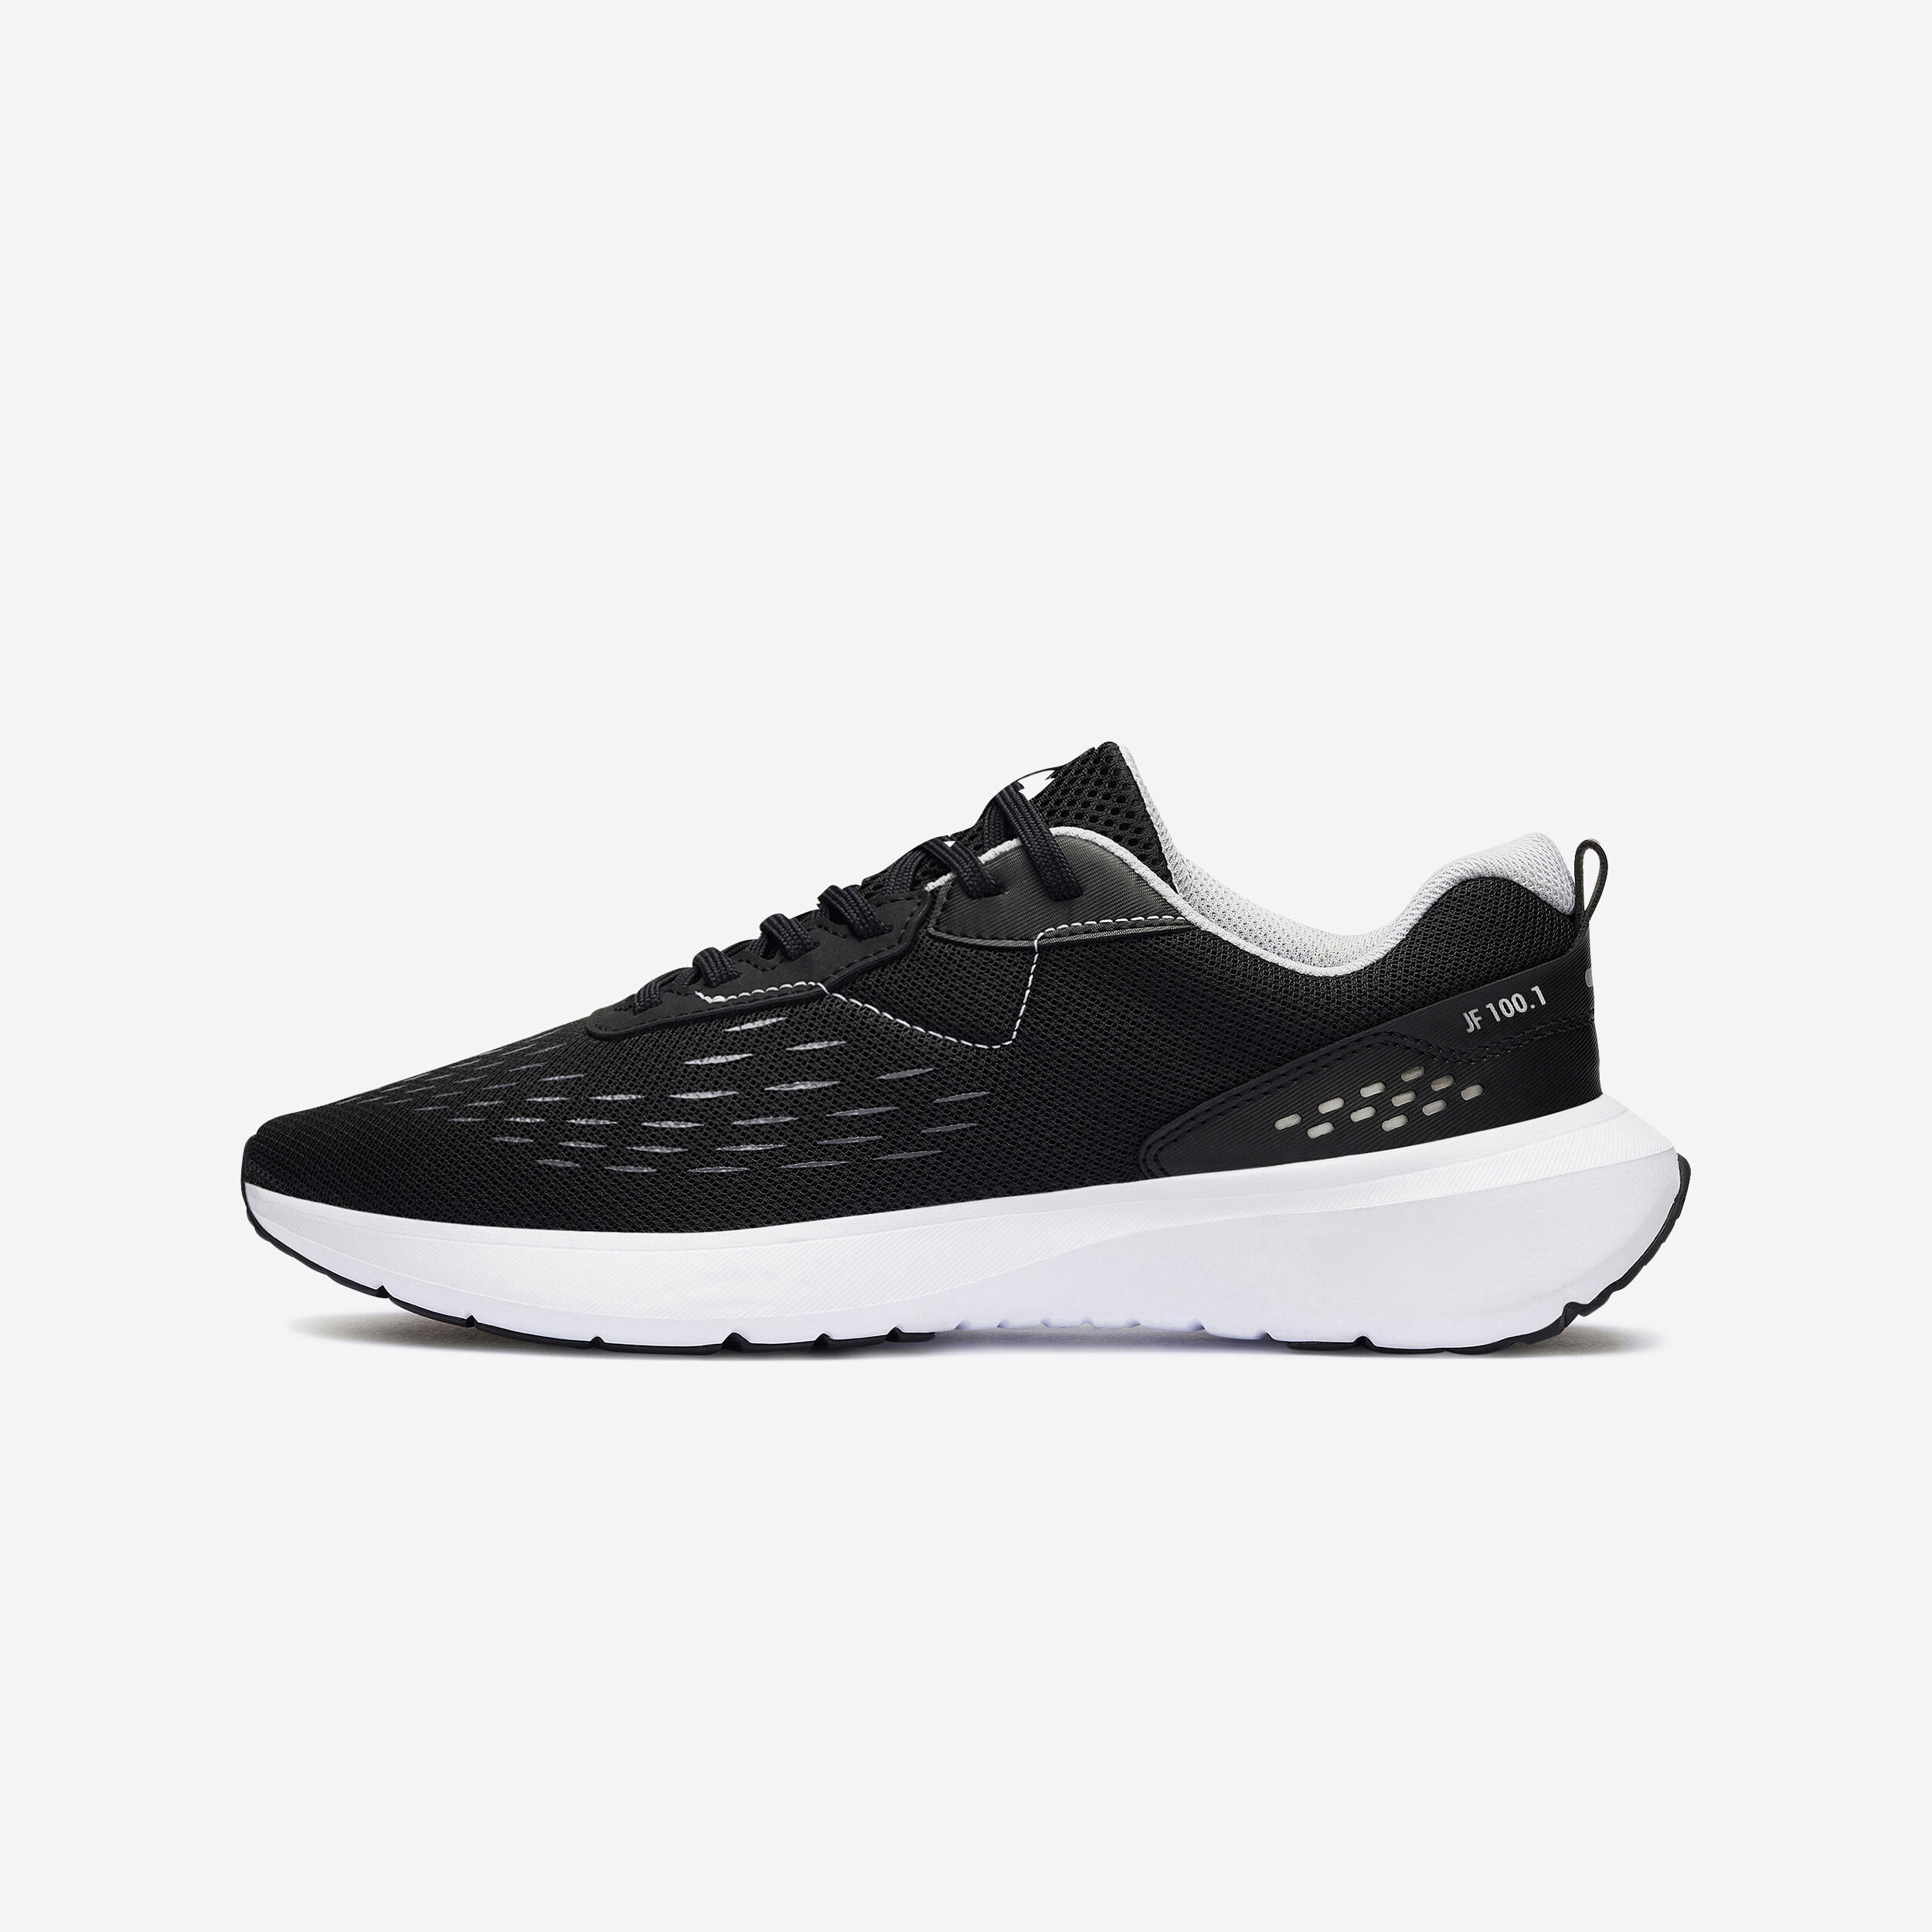 Kalenji Men's Jogflow 100.1 Running Shoes - Black/grey